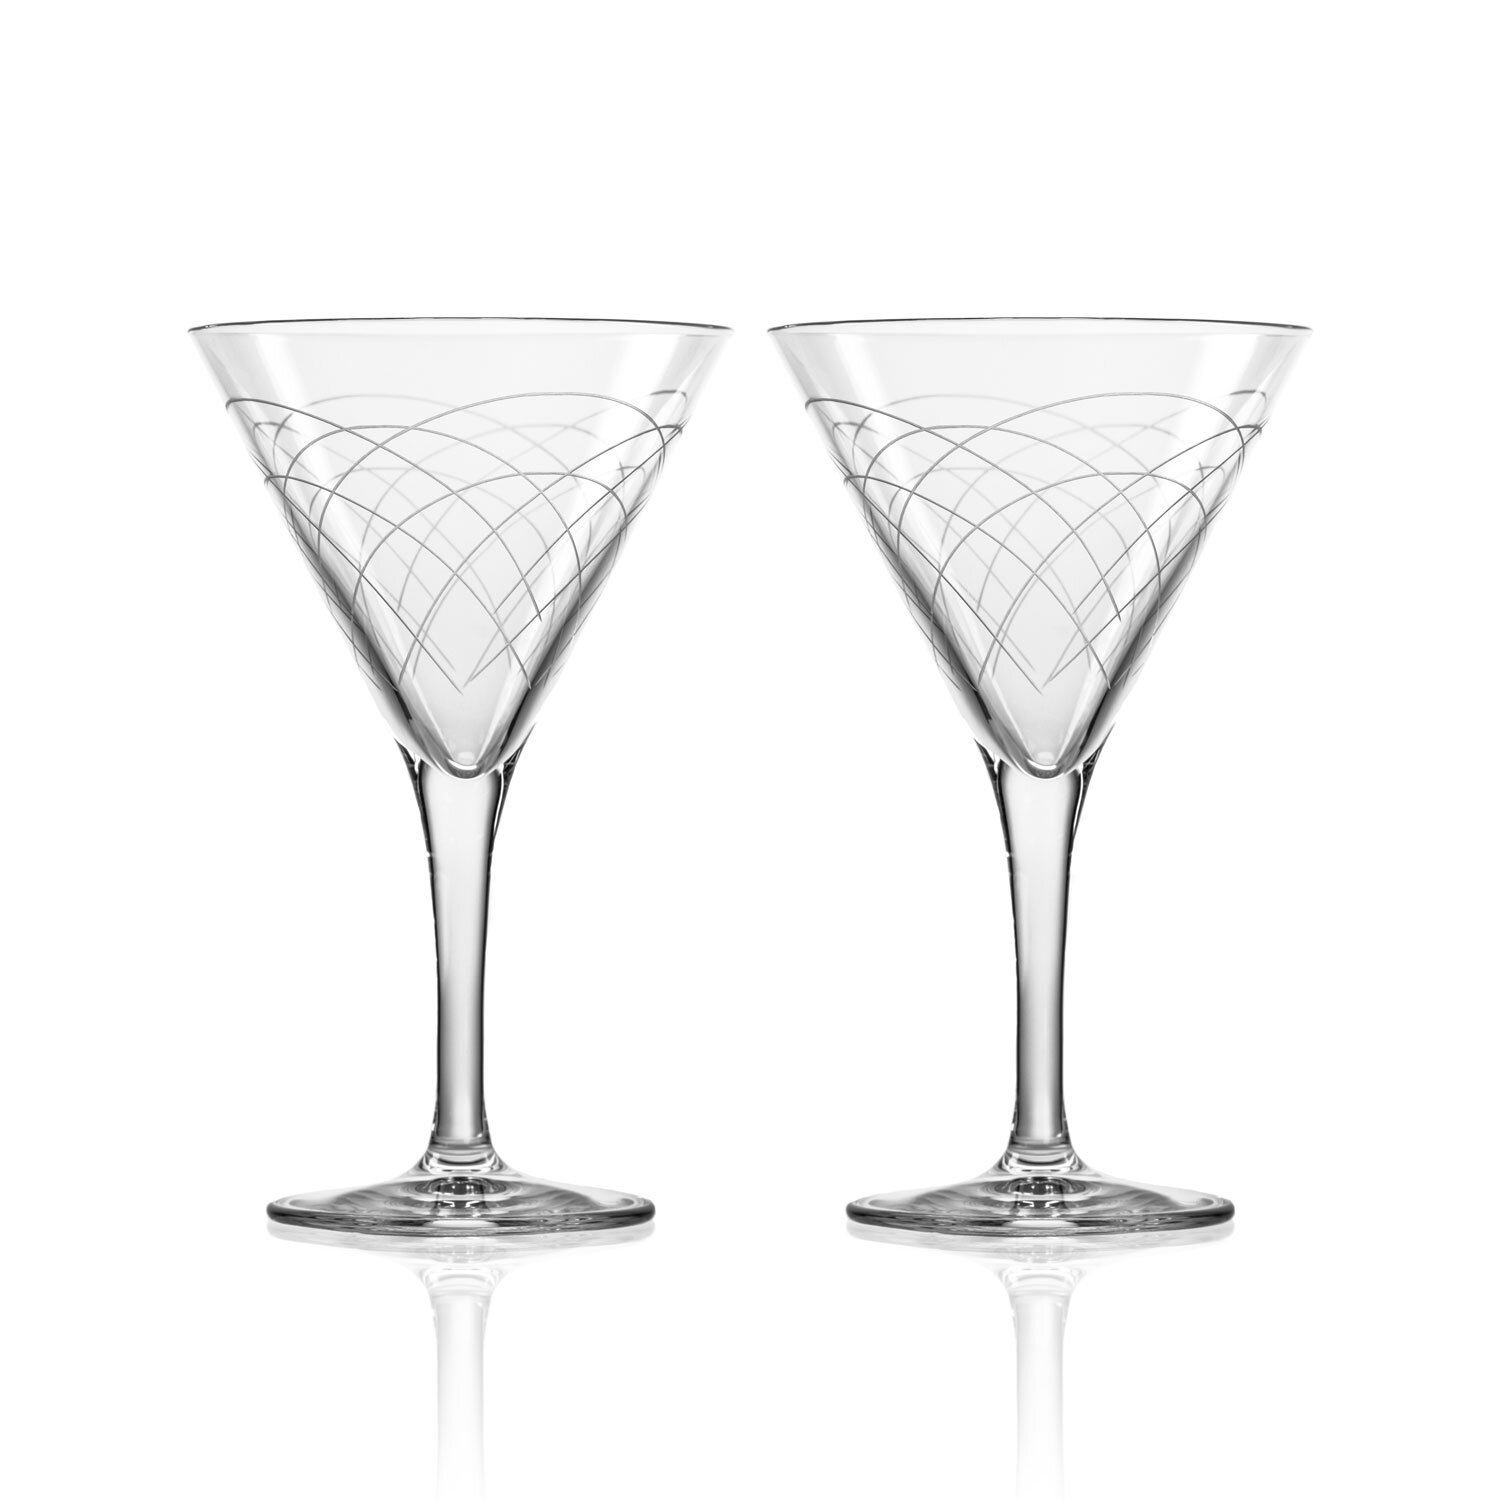 Everly Quinn 2 Piece 8 oz. Martini Glasses Set